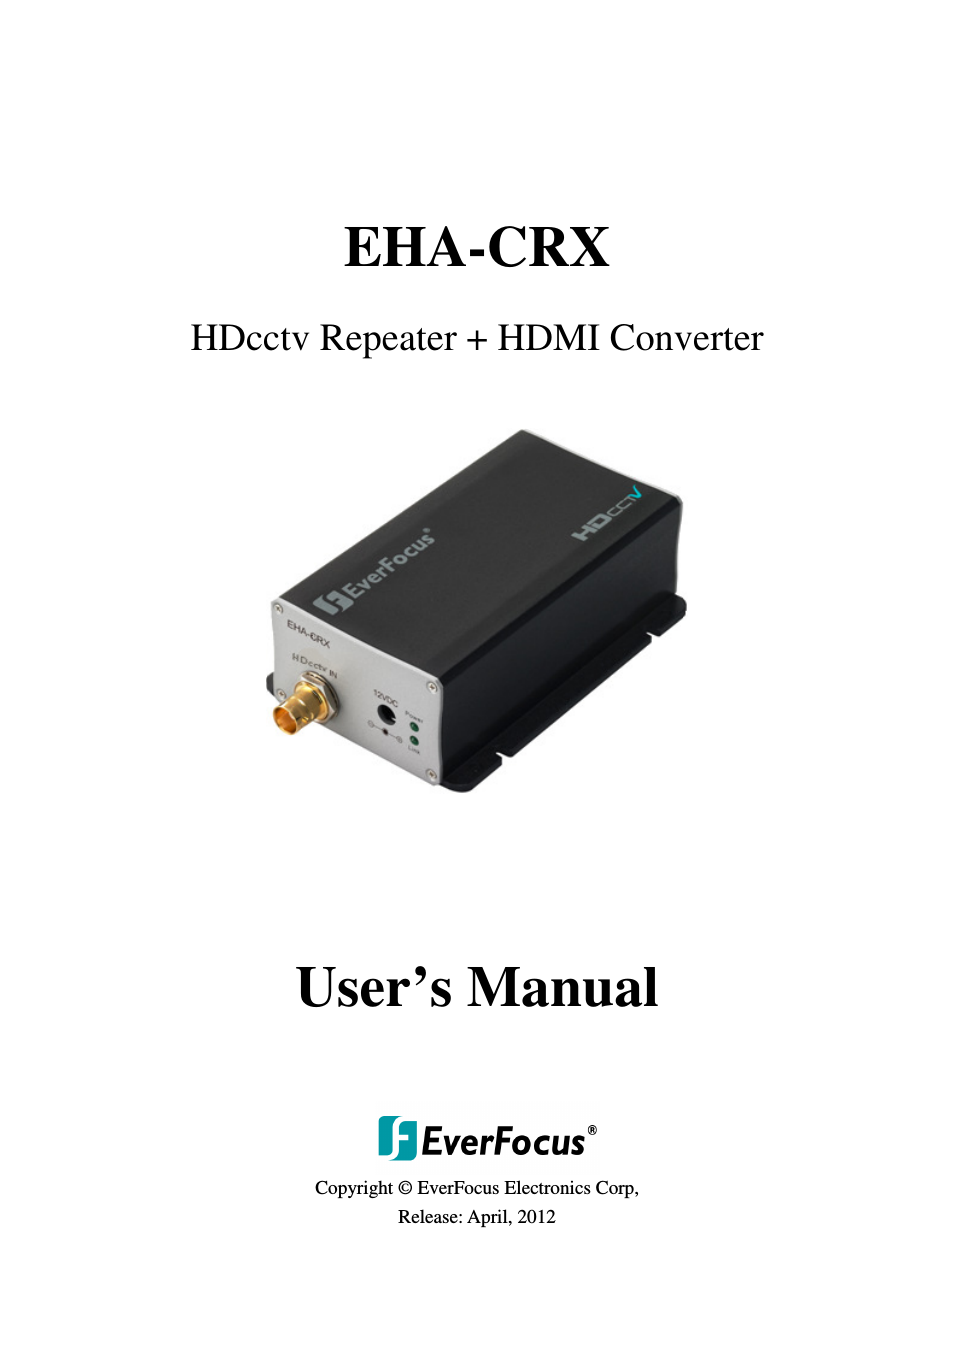 HDcctv Repeater + HDMI Converter EHA-CRX